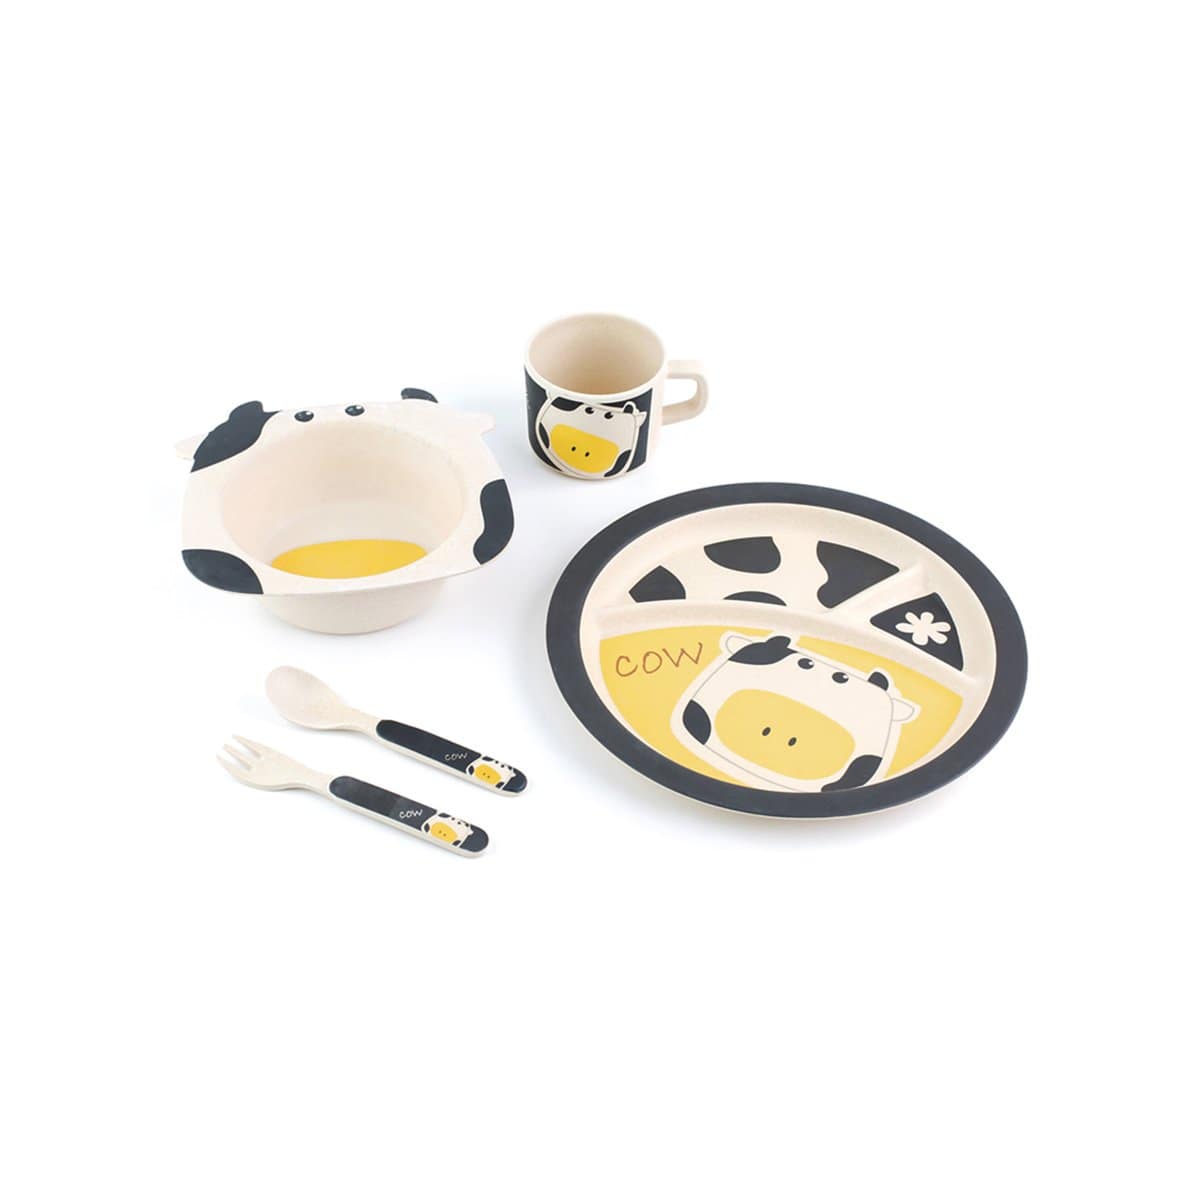 Cow -5pcs Kids Dinnerware Set by Peterson Housewares & Artwares